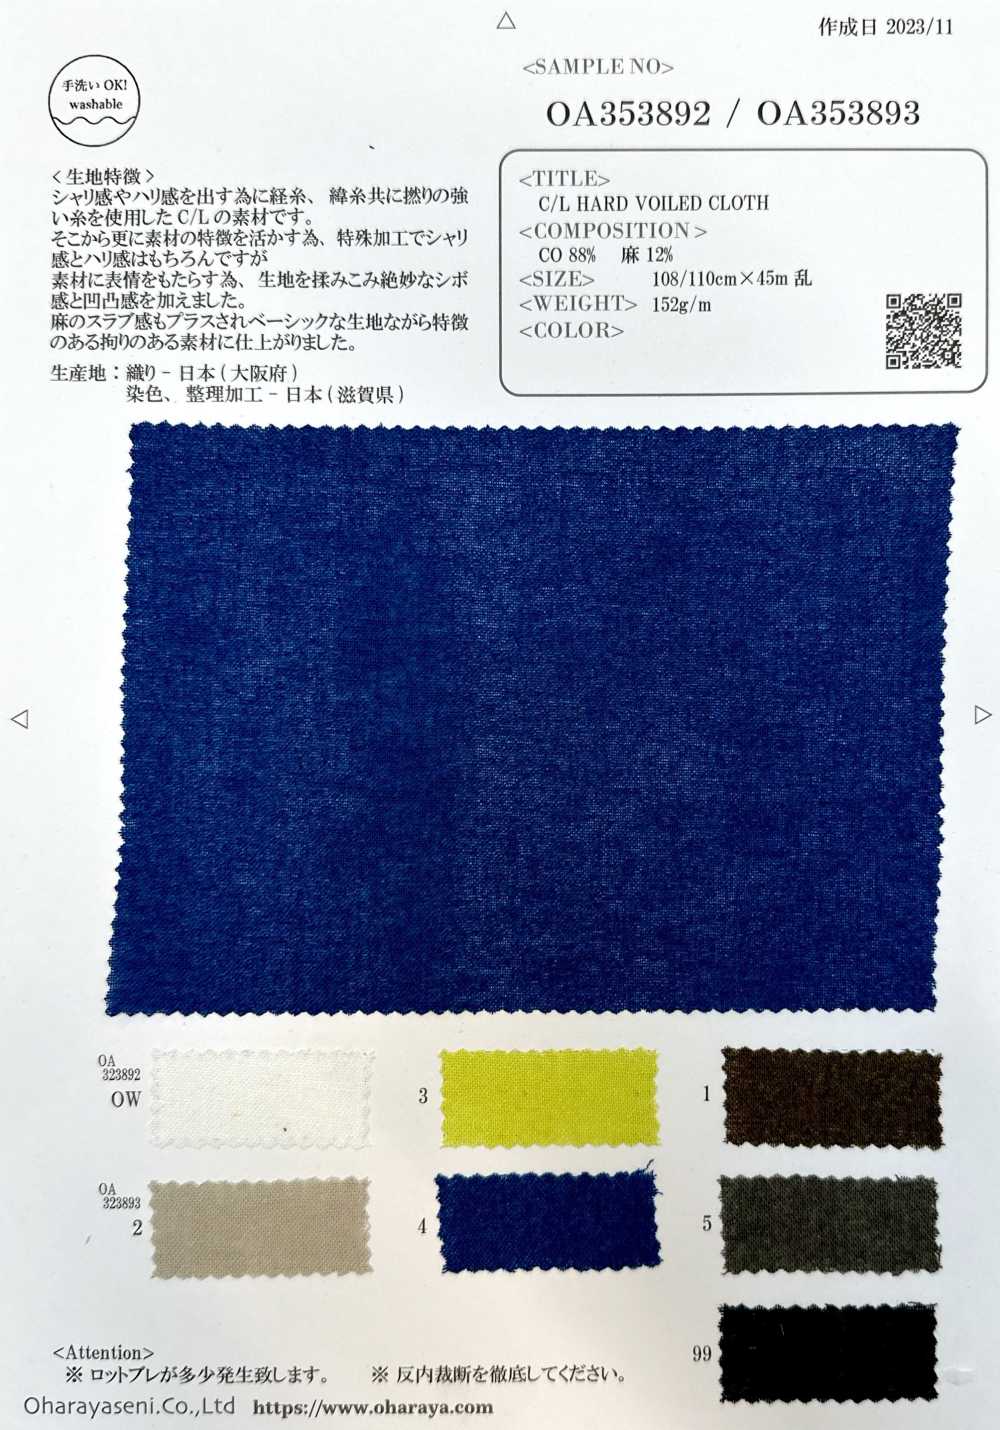 OA353892 C/L PAÑO VOILADO DURO[Fabrica Textil] Oharayaseni